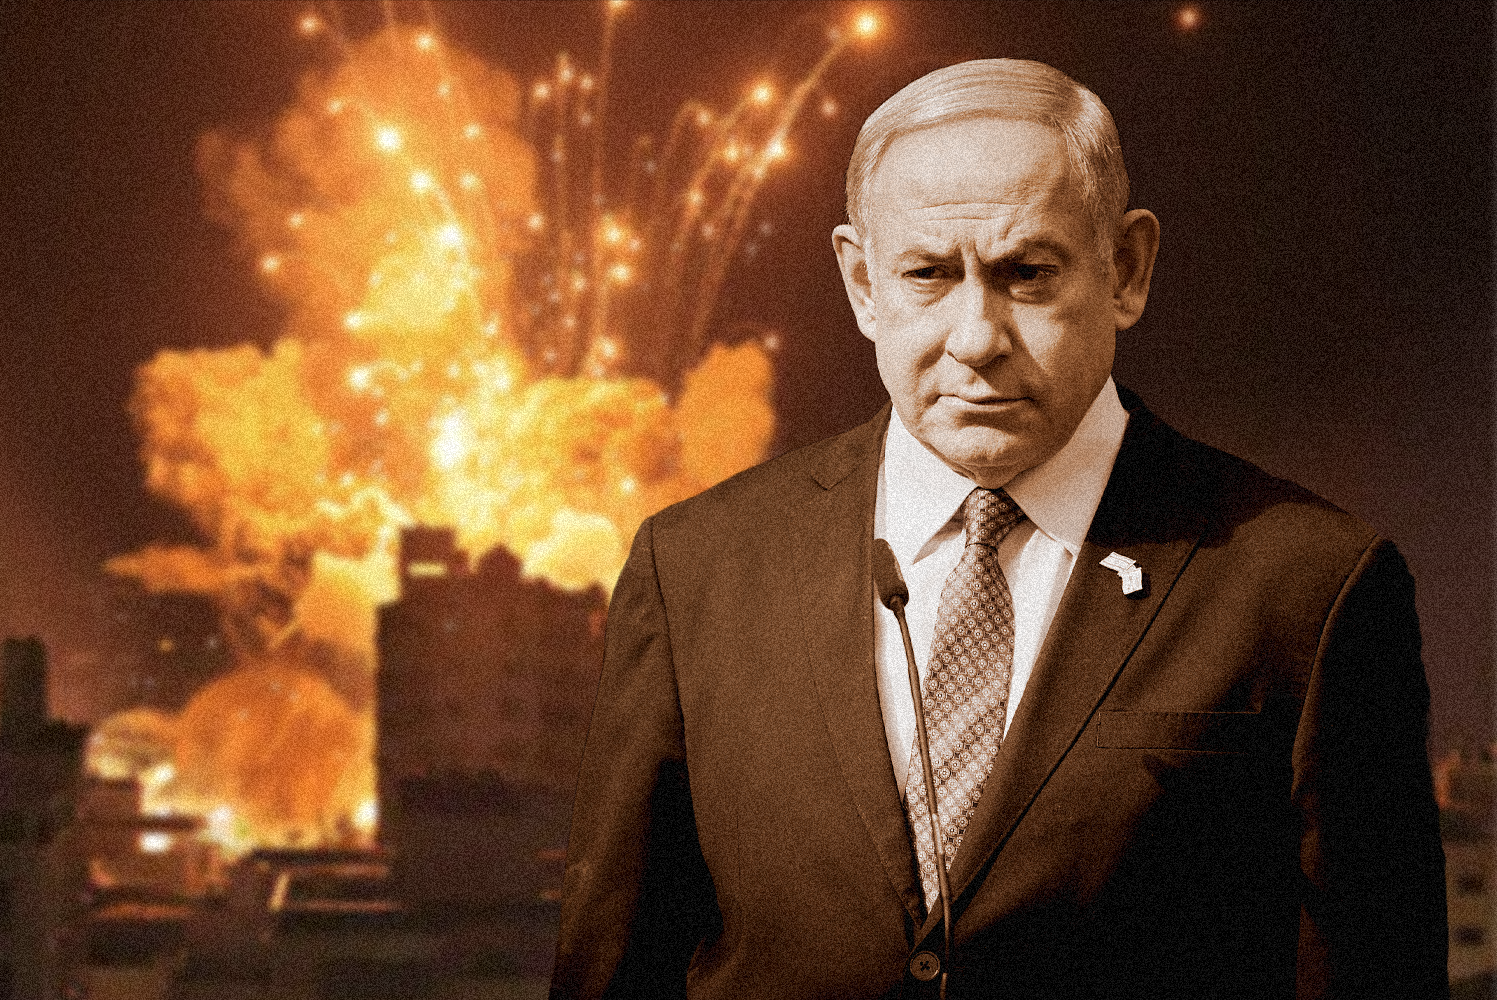 Netanyahu criminal Image own work